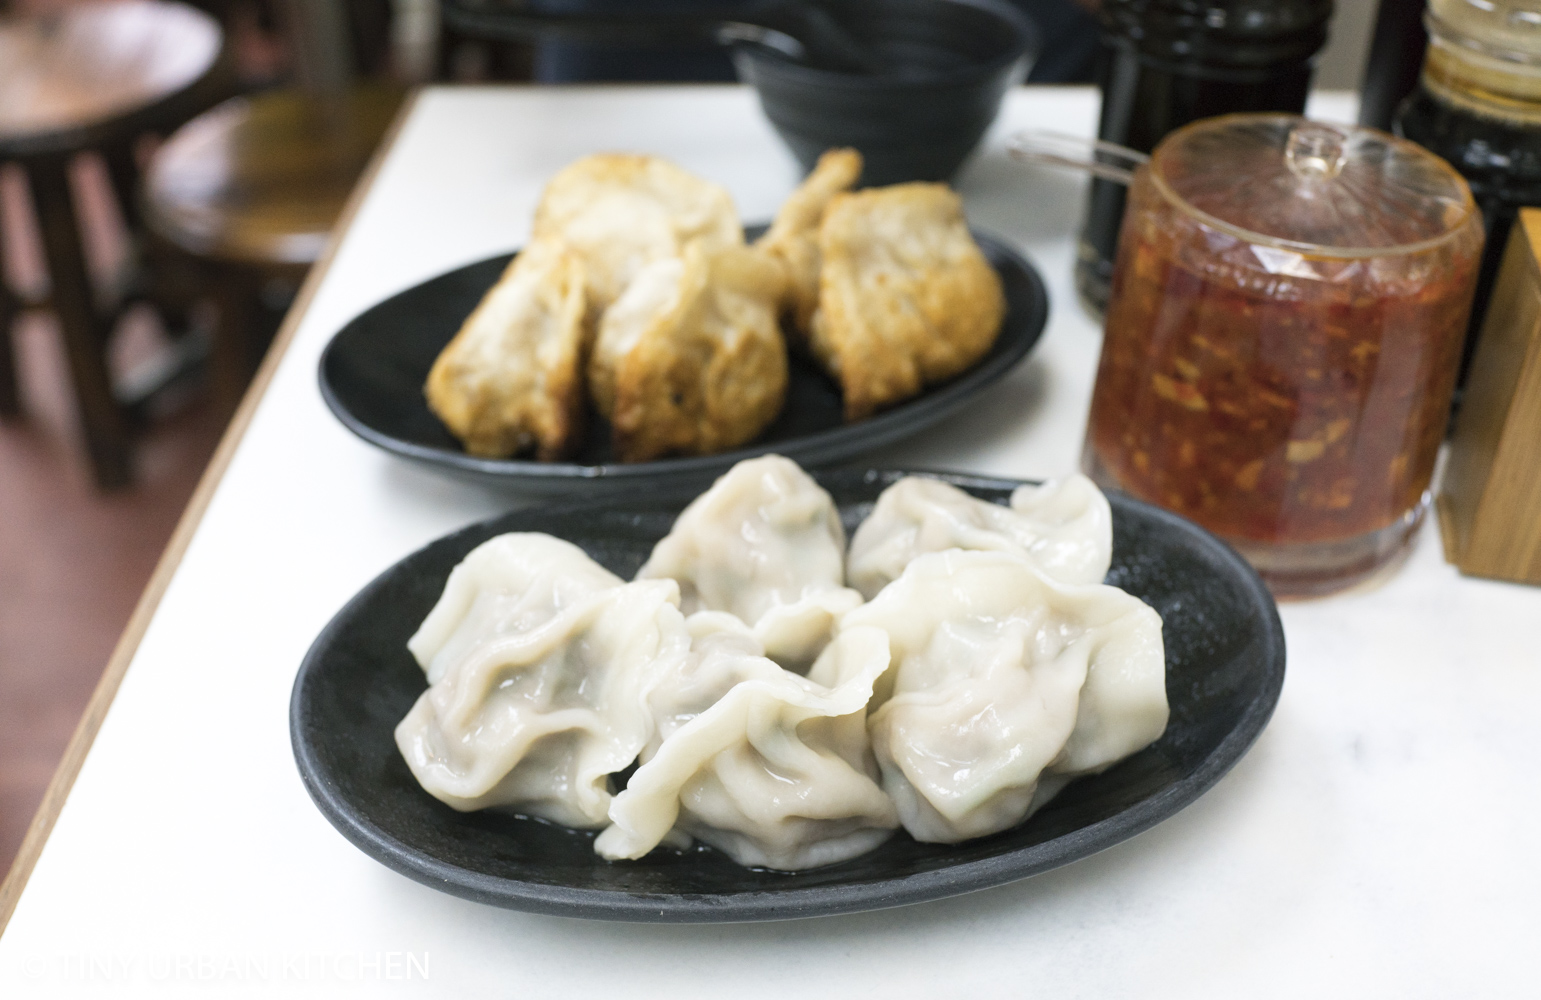 Fried and Boiled Dumplings from Northern Yuan Dumpling